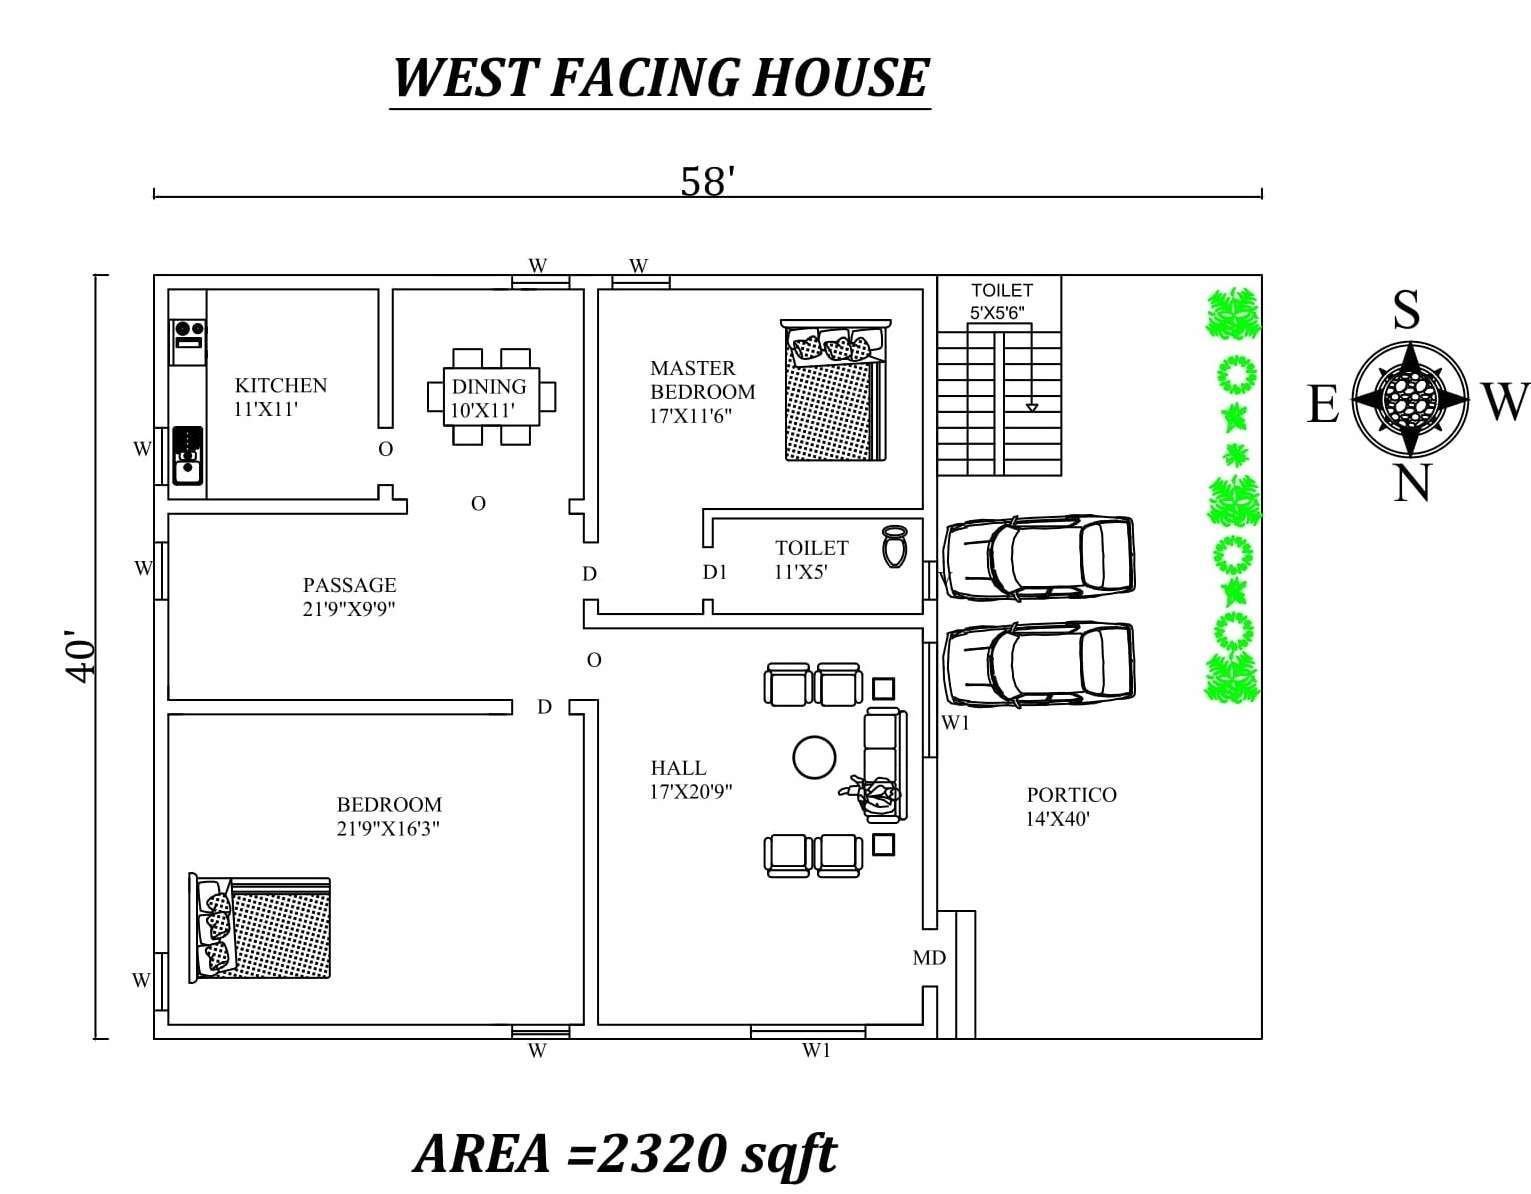 58'x40' 2 BHK west facing house plan as per vastu shatra